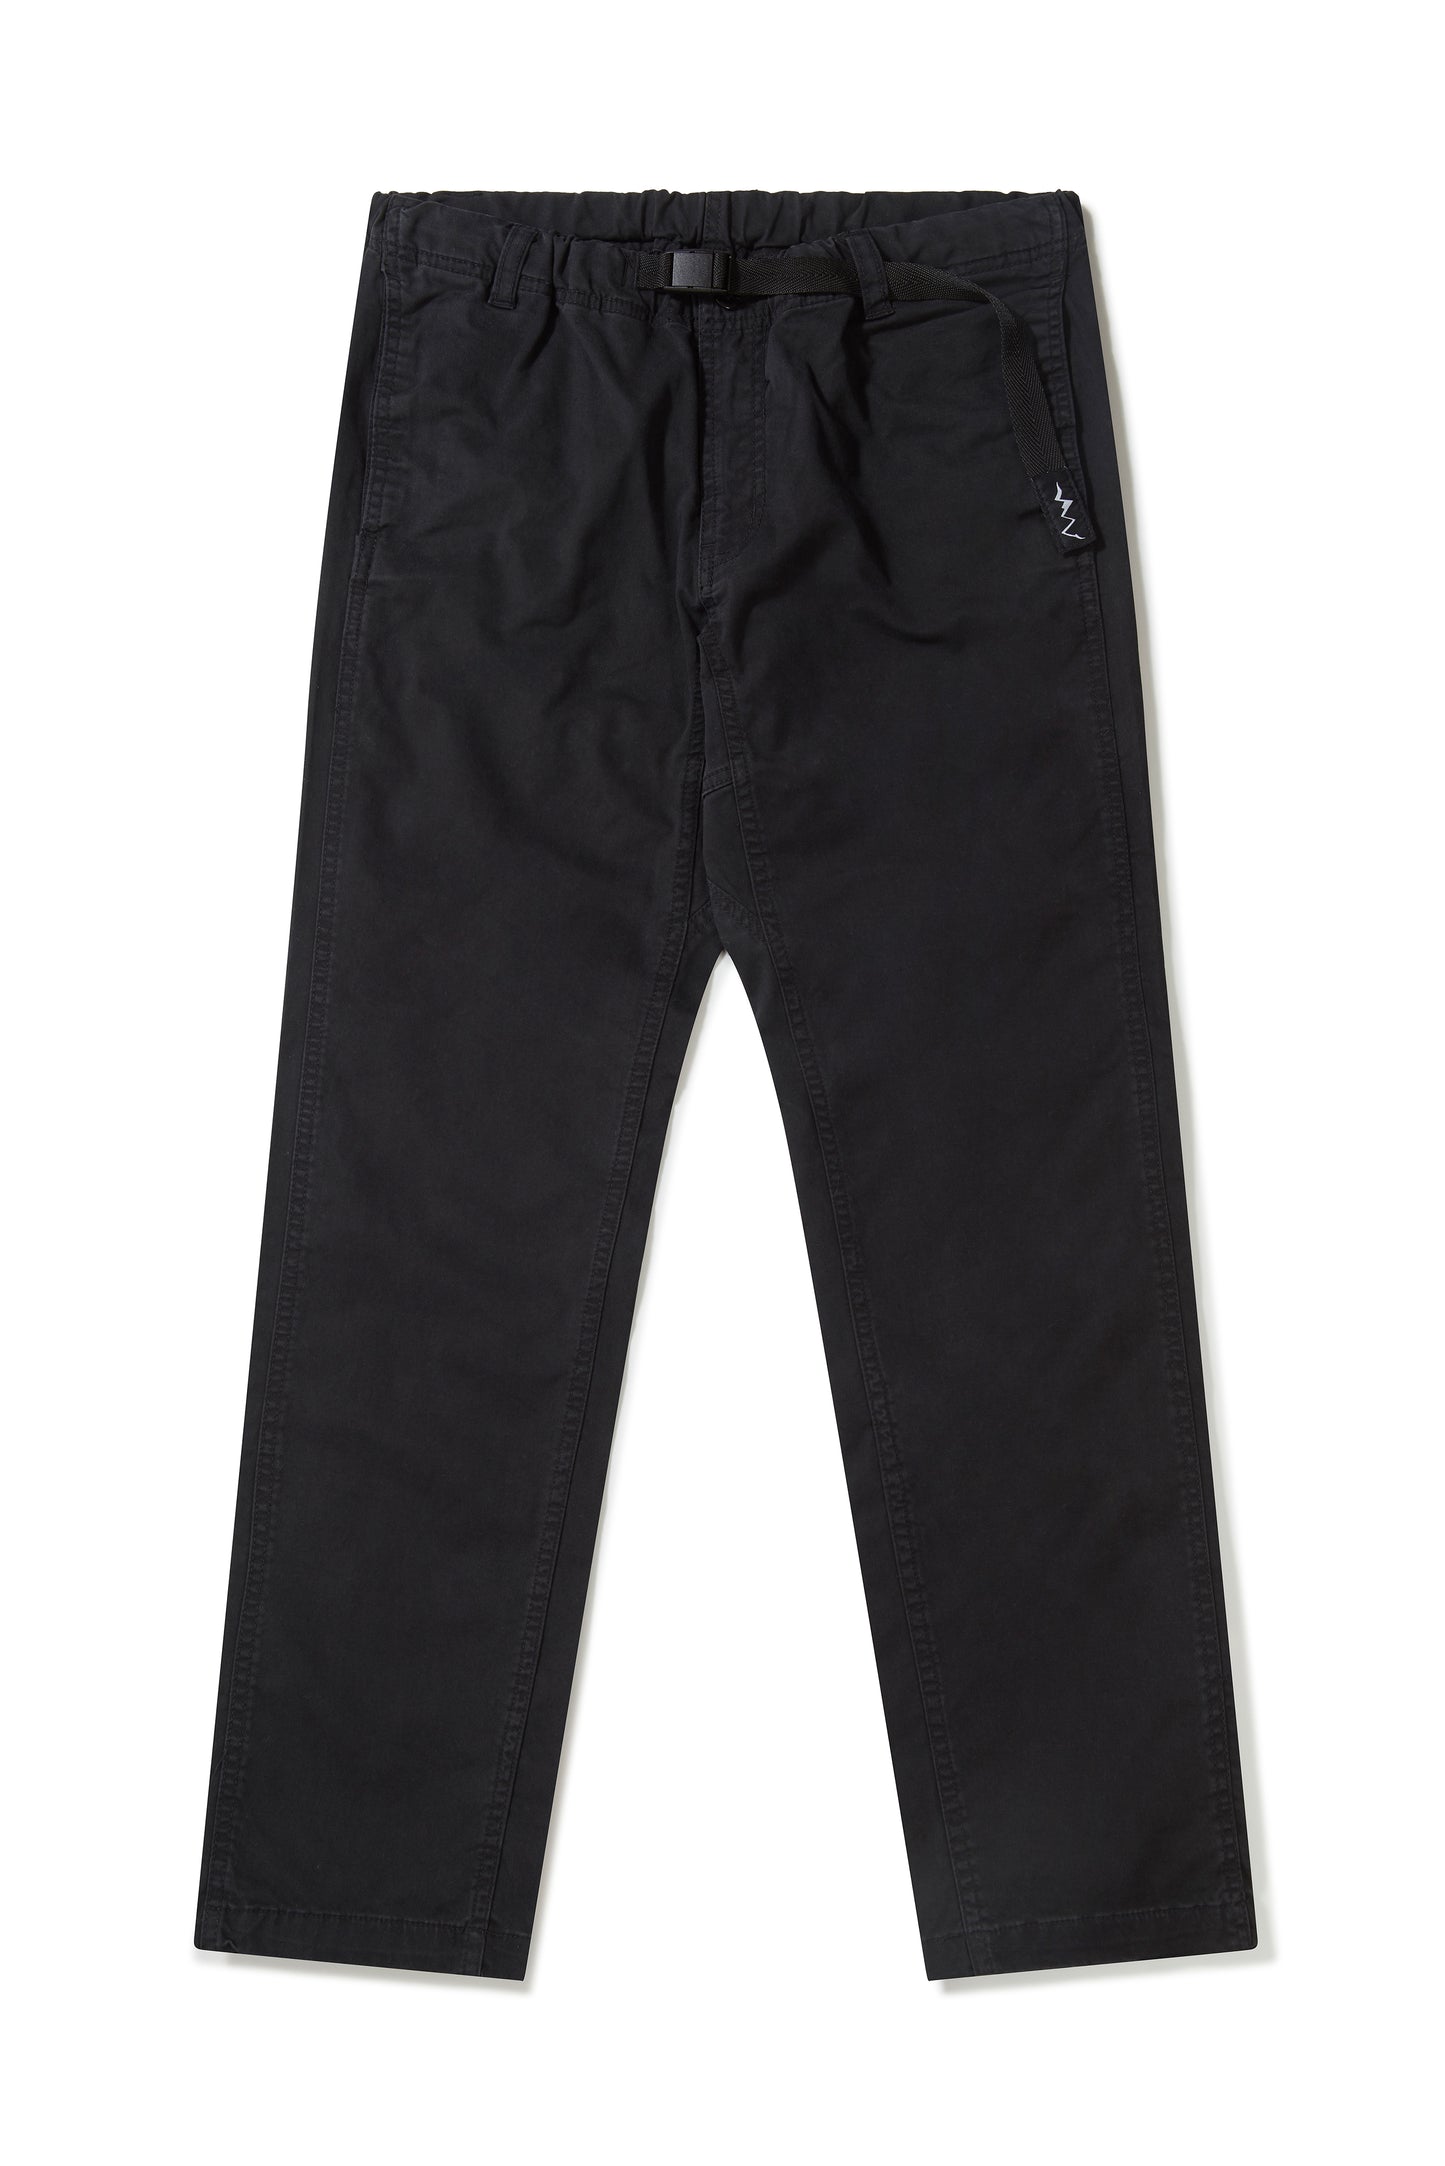 Flex Climber Pants (Black)